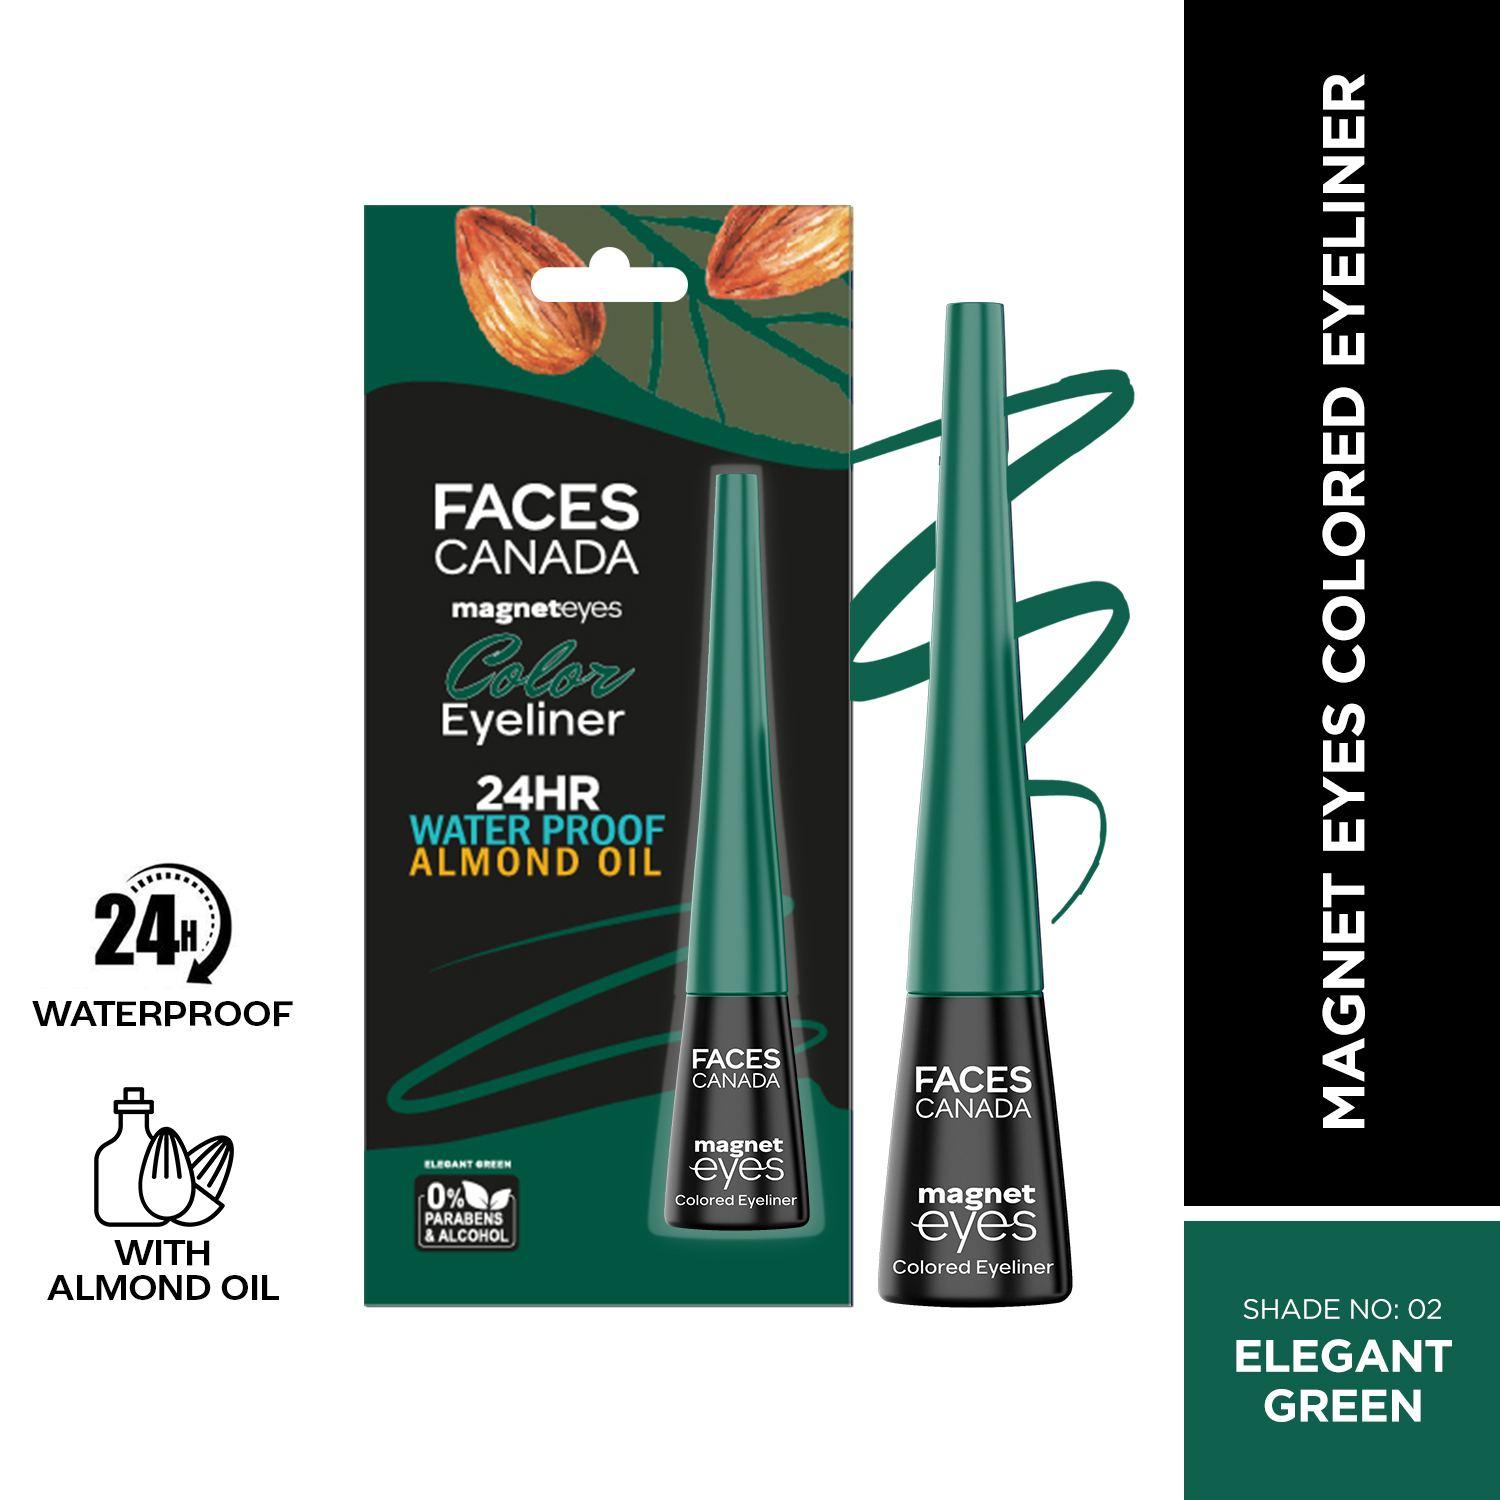 Faces Canada | Faces Canada Magneteyes Color Eyeliner, Glossy Finish, 24HR Long-lasting - Elegant Green (4 ml)